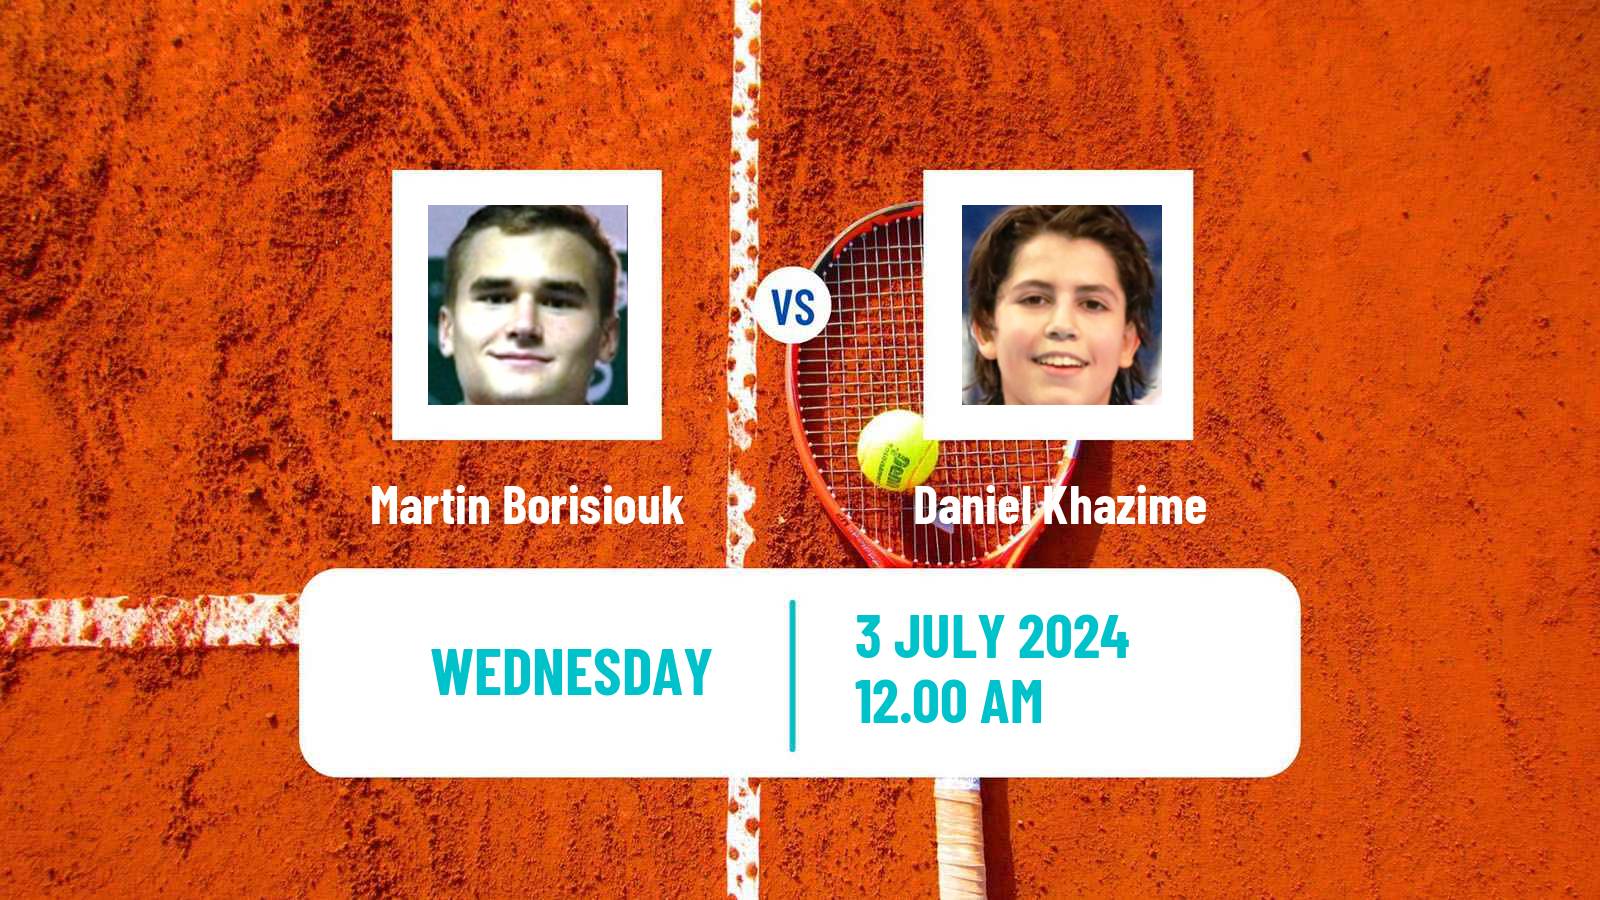 Tennis ITF M15 Ust Kamenogorsk 2 Men 2024 Martin Borisiouk - Daniel Khazime